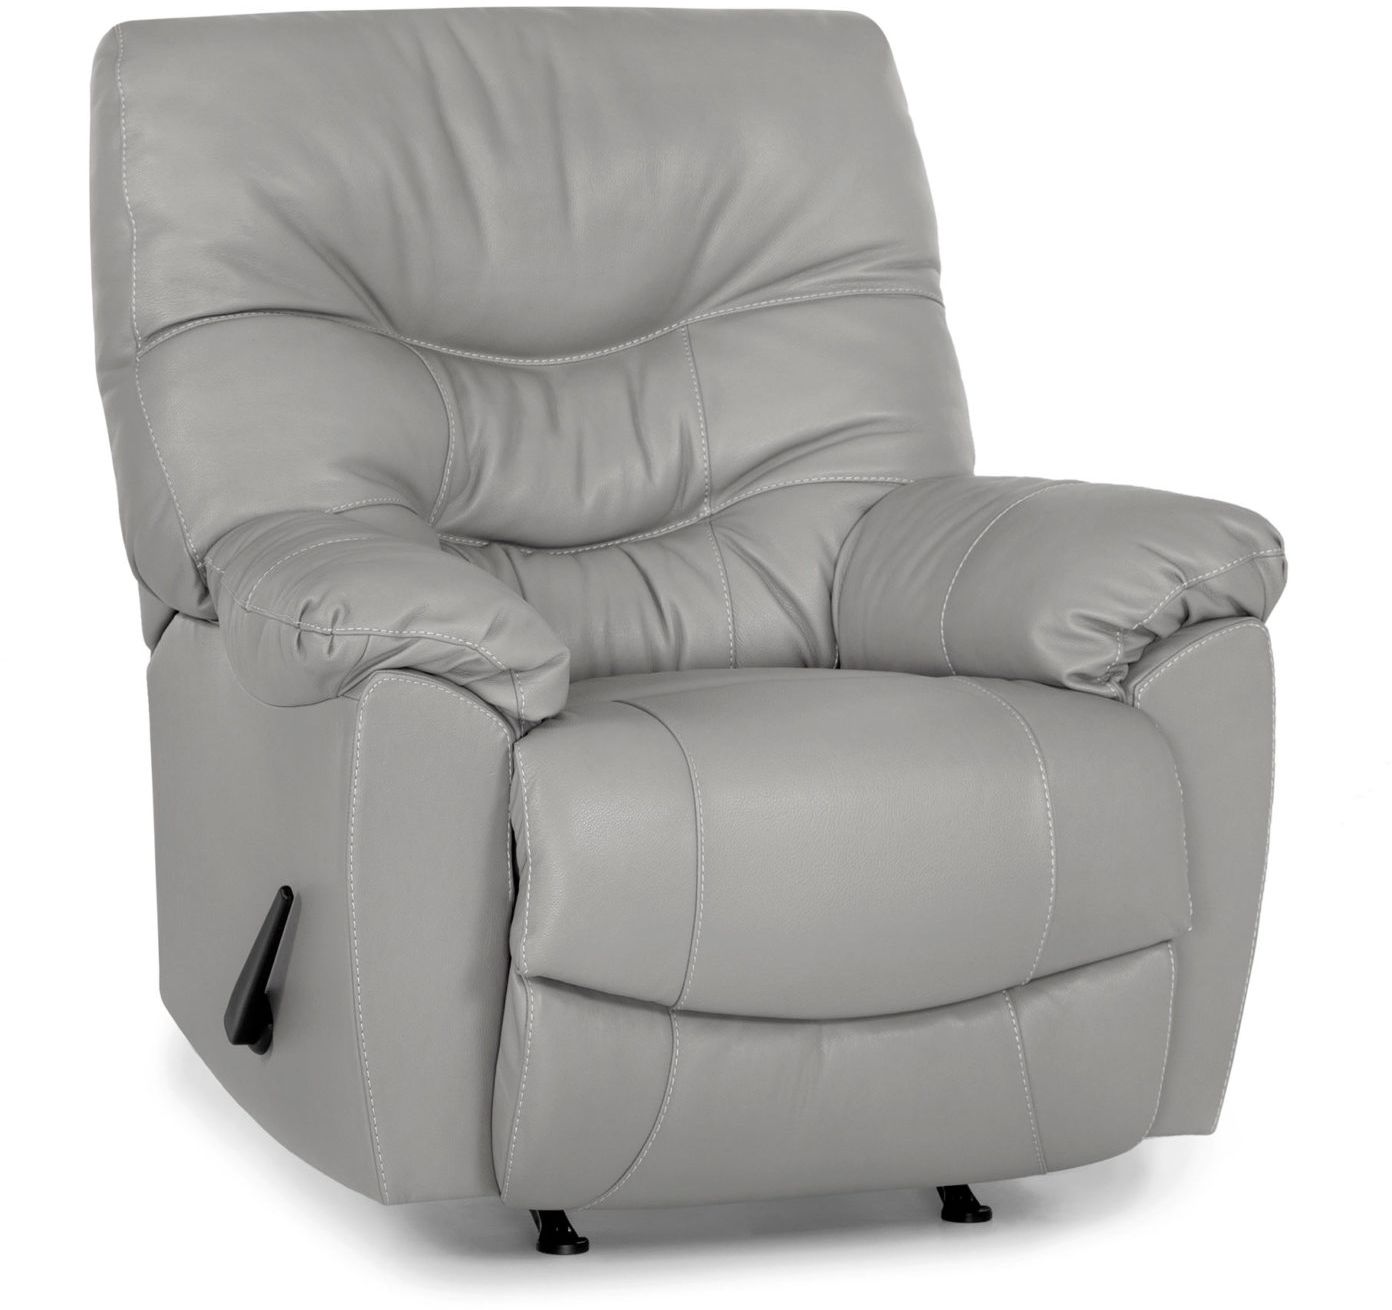 Franklin™ Trilogy Bison Light Gray Recliner Chair